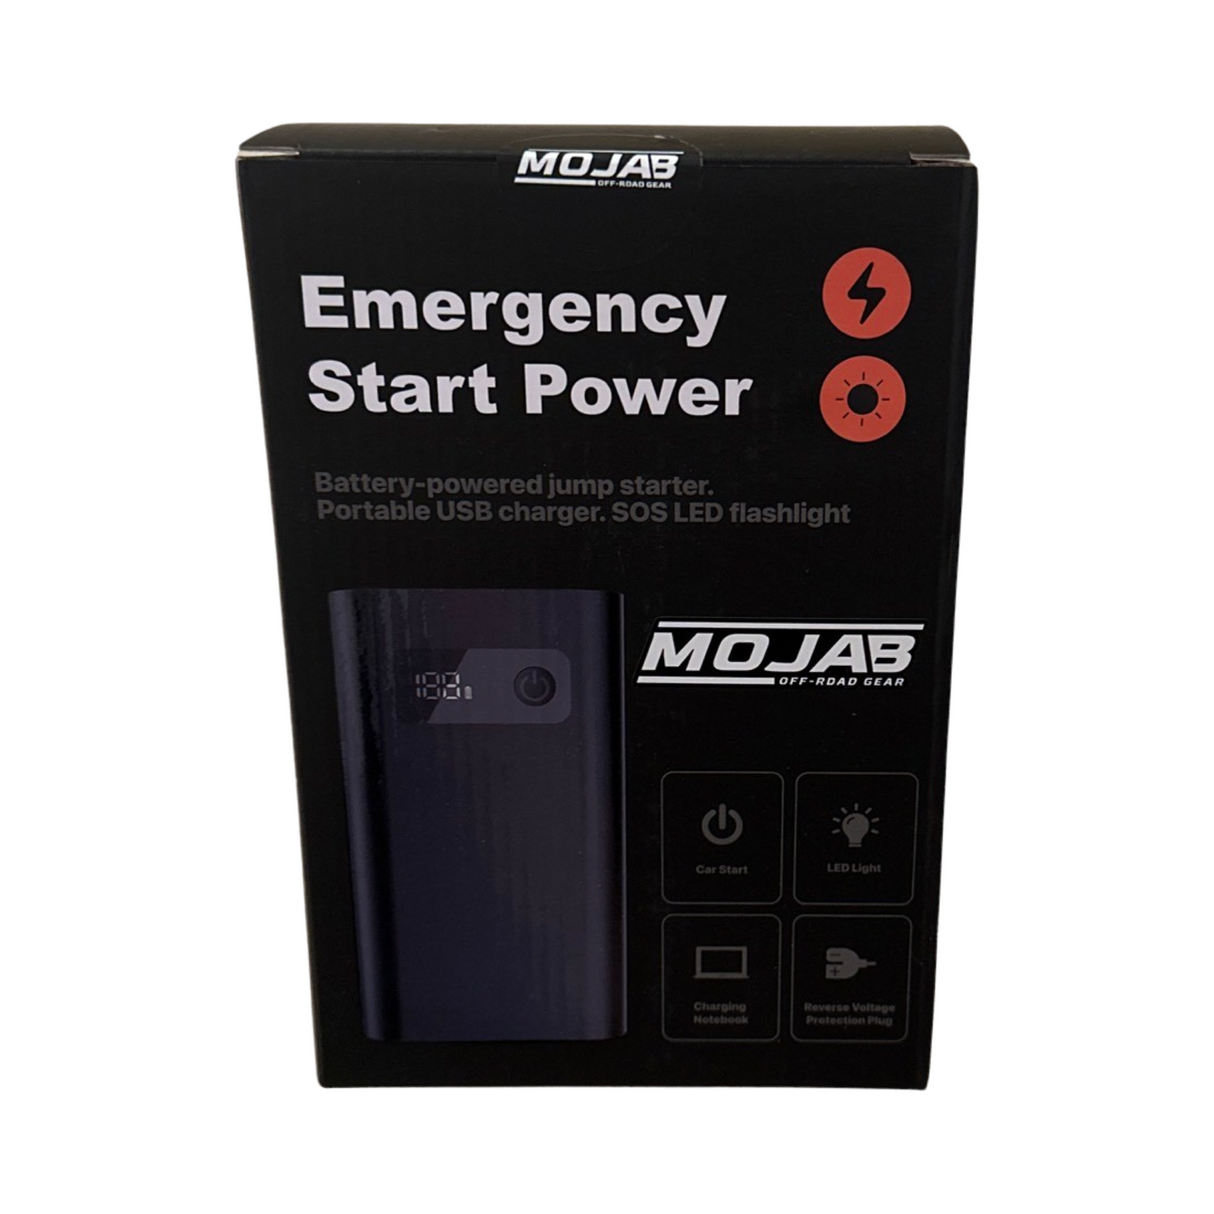 Emergency Start Power / Battery Booster.